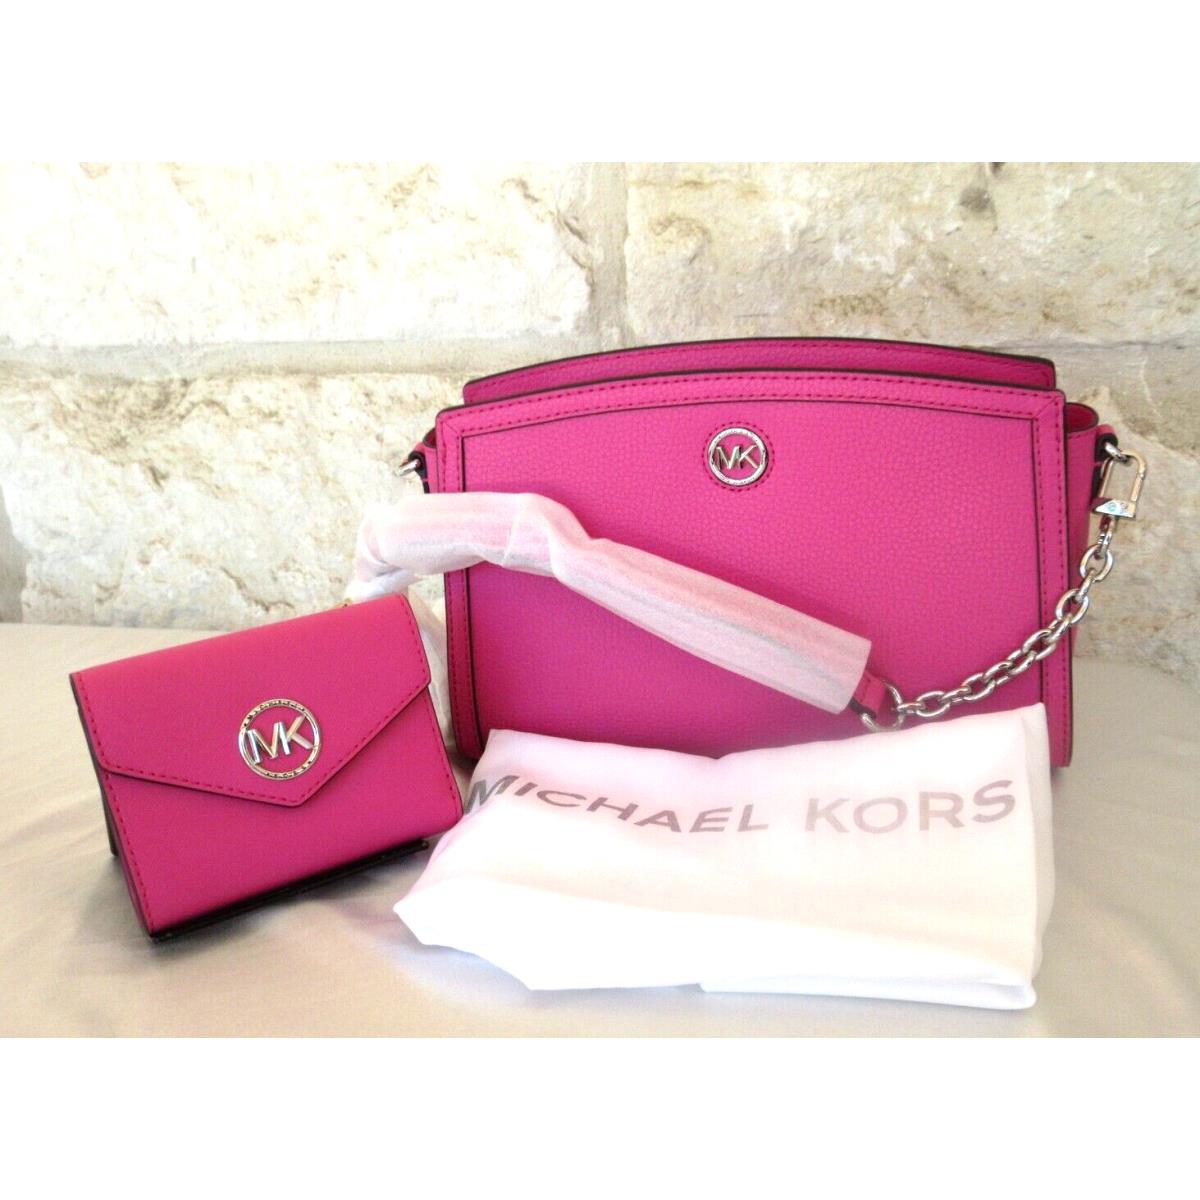 Michael Kors  bag  Chantal - Cerise/Pink Bright Colorful Handle/Strap, Silver Hardware, Cerise (Pink) Silver hardware Exterior 0